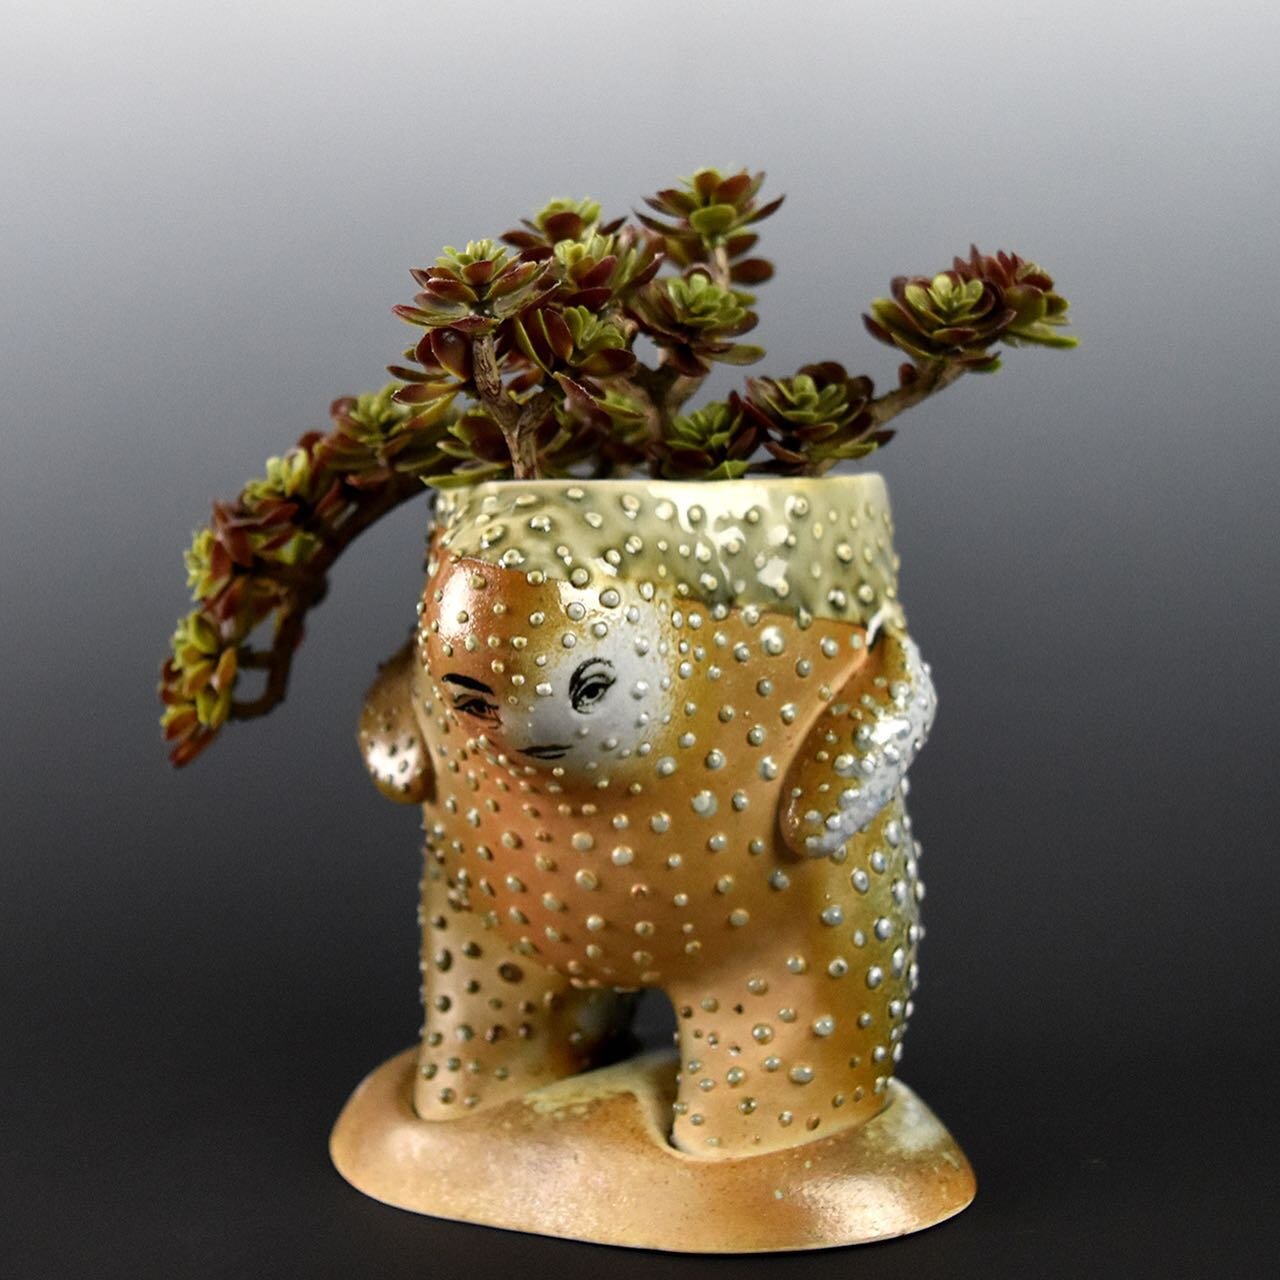 New creature pots are a foot! #creature #woodfire #porcelain #planters #succulents #sculpture #surrealism #handmade